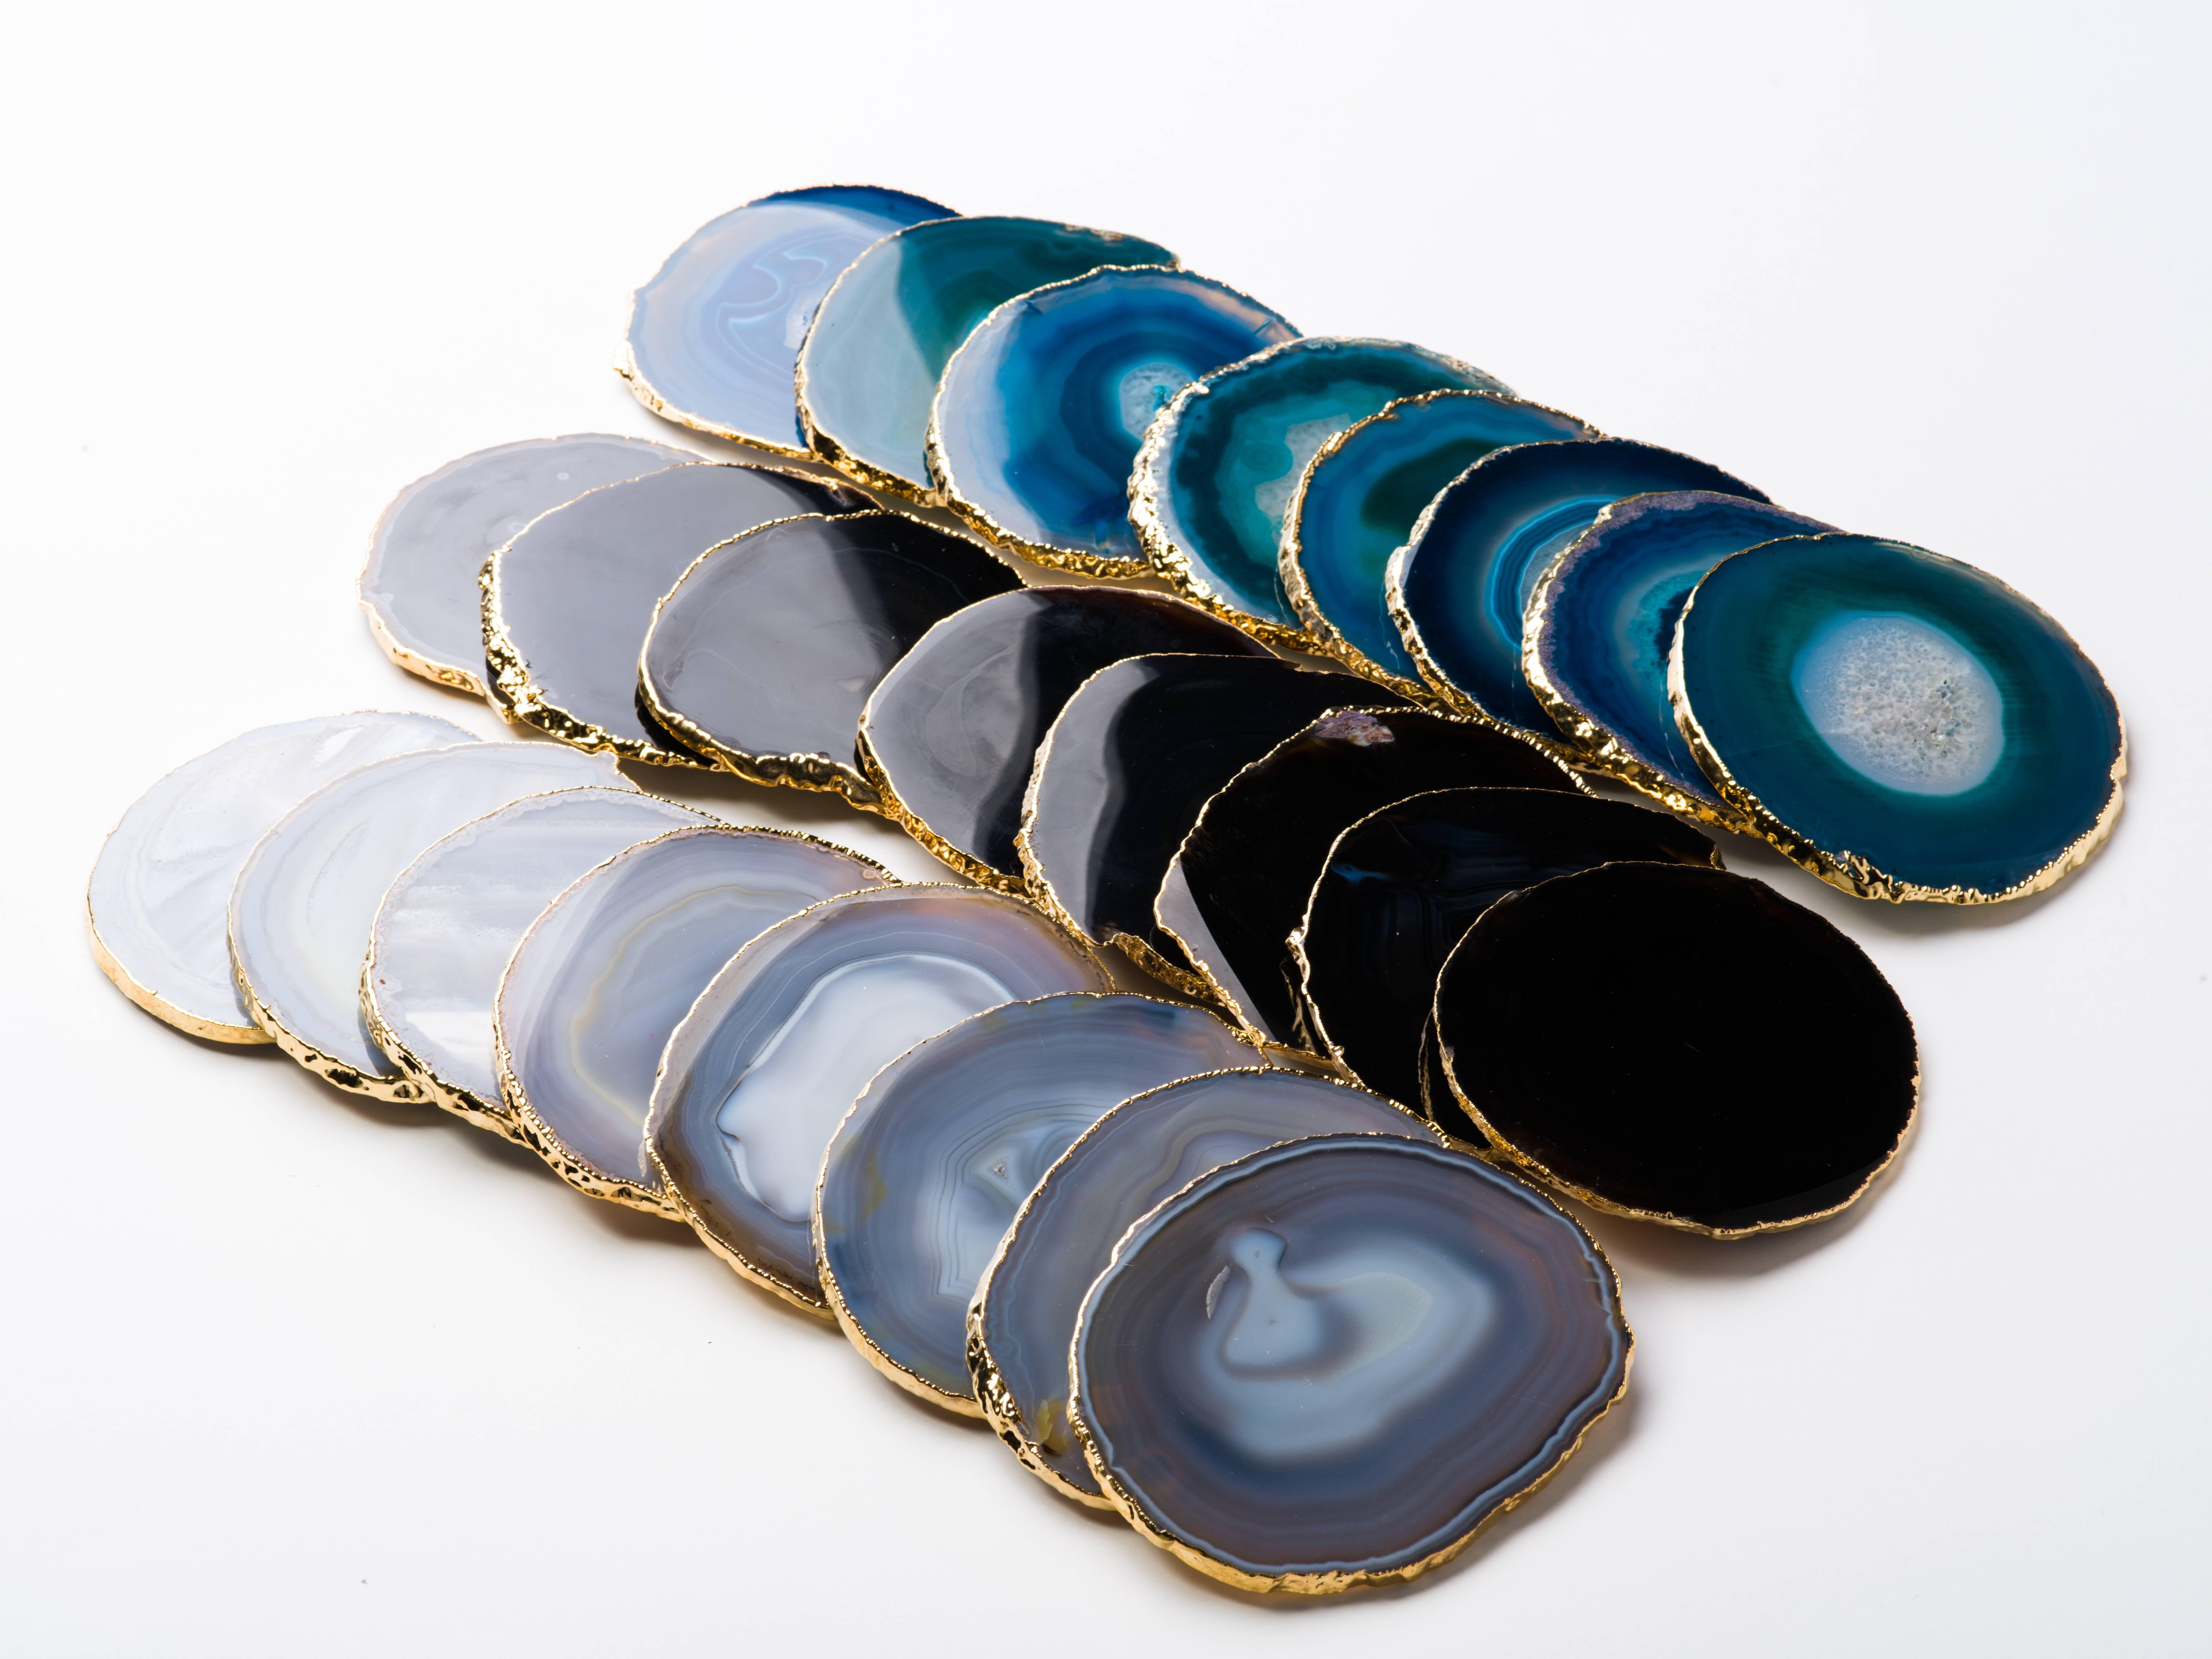 Contemporary Set of Eight Semi-Precious Gemstone Coasters in Black Agate with 24 K Gold Trim